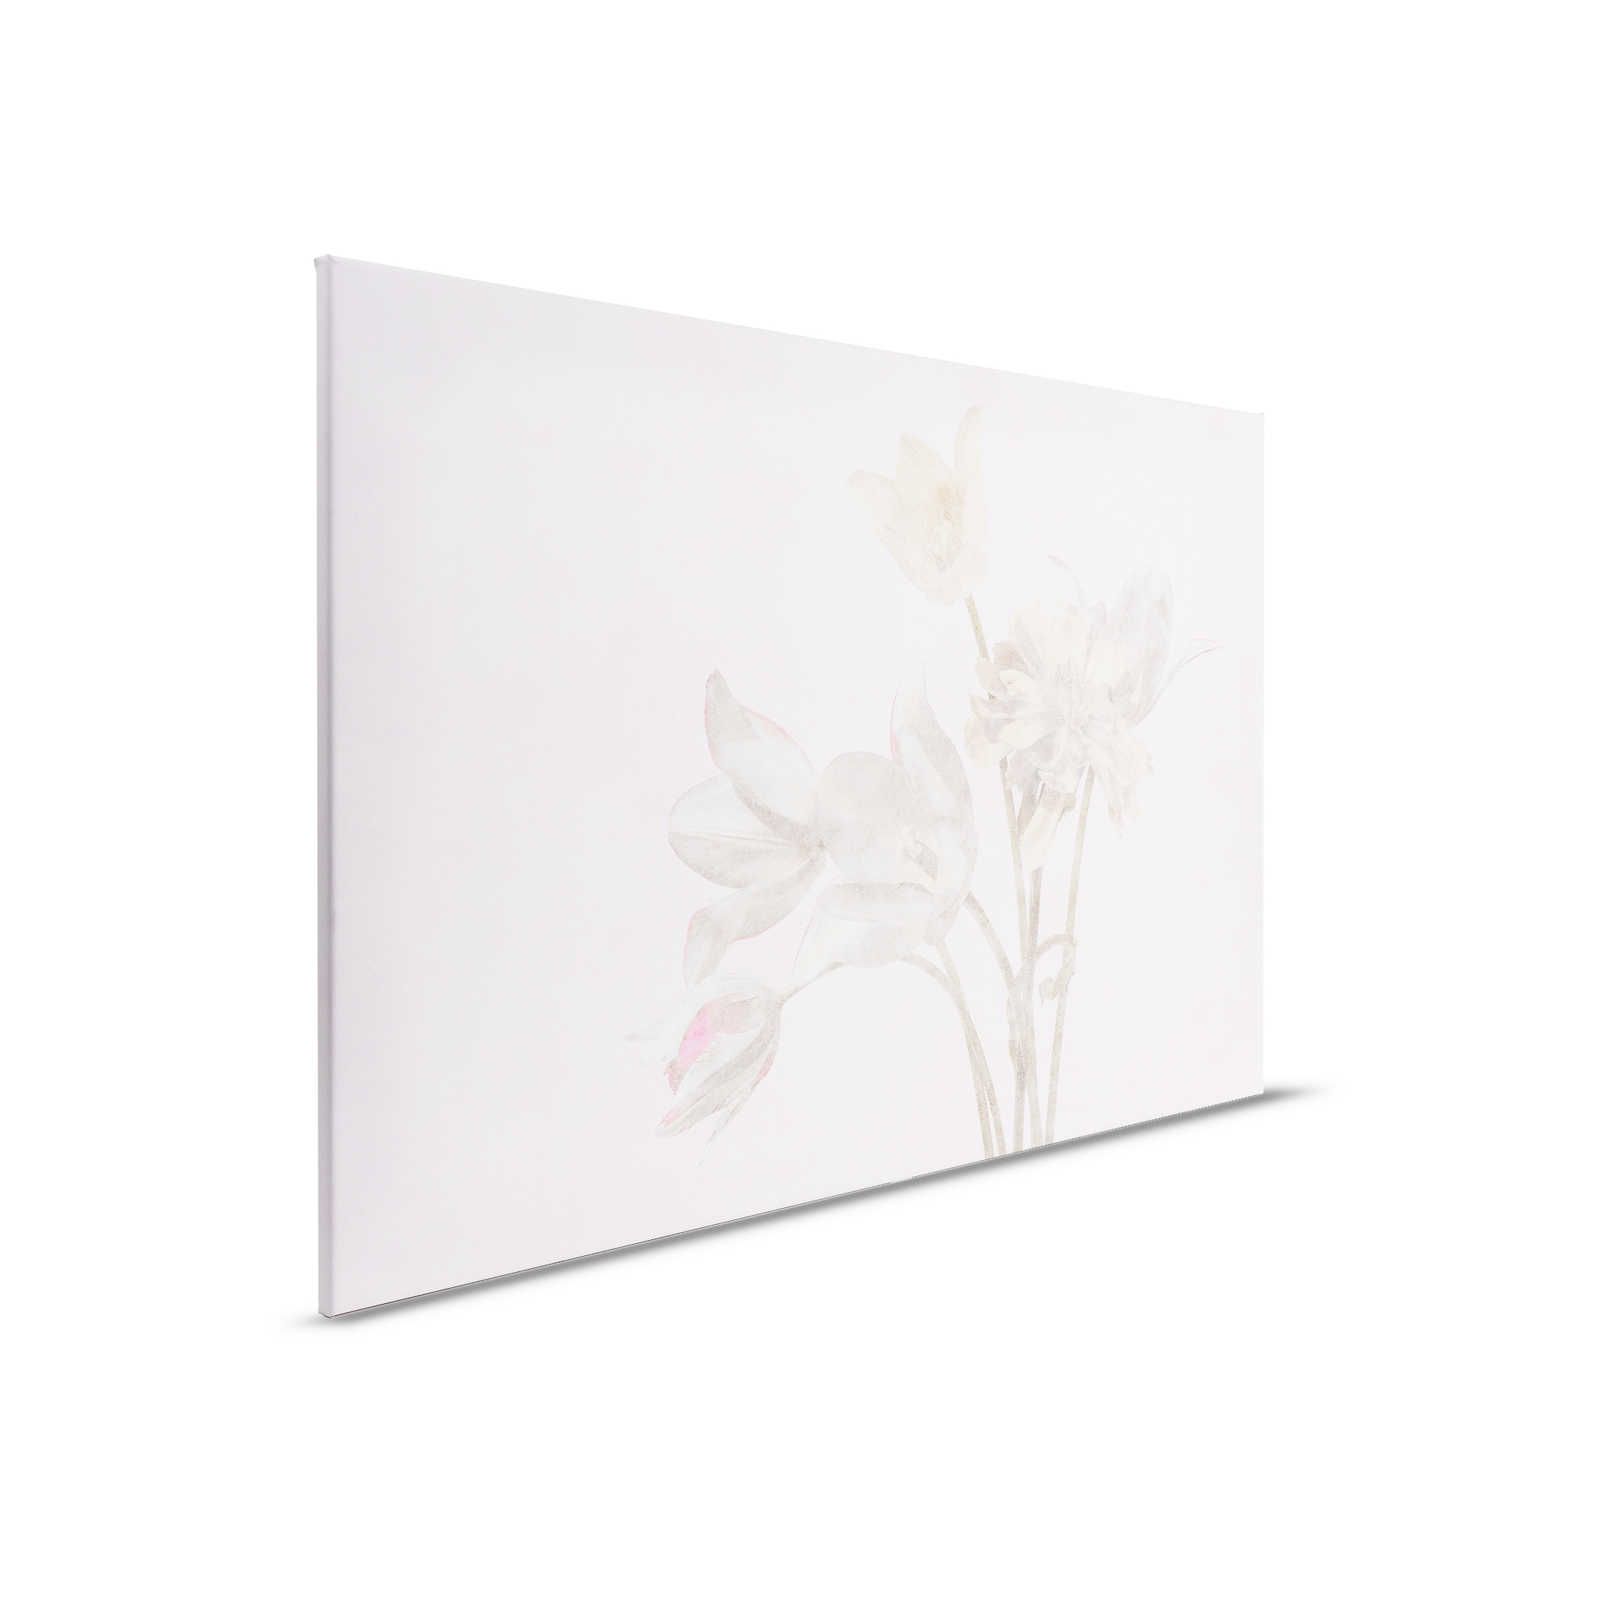 Habitación matinal 1 - Pintura en lienzo Flores de estilo desteñido - 0,90 m x 0,60 m
